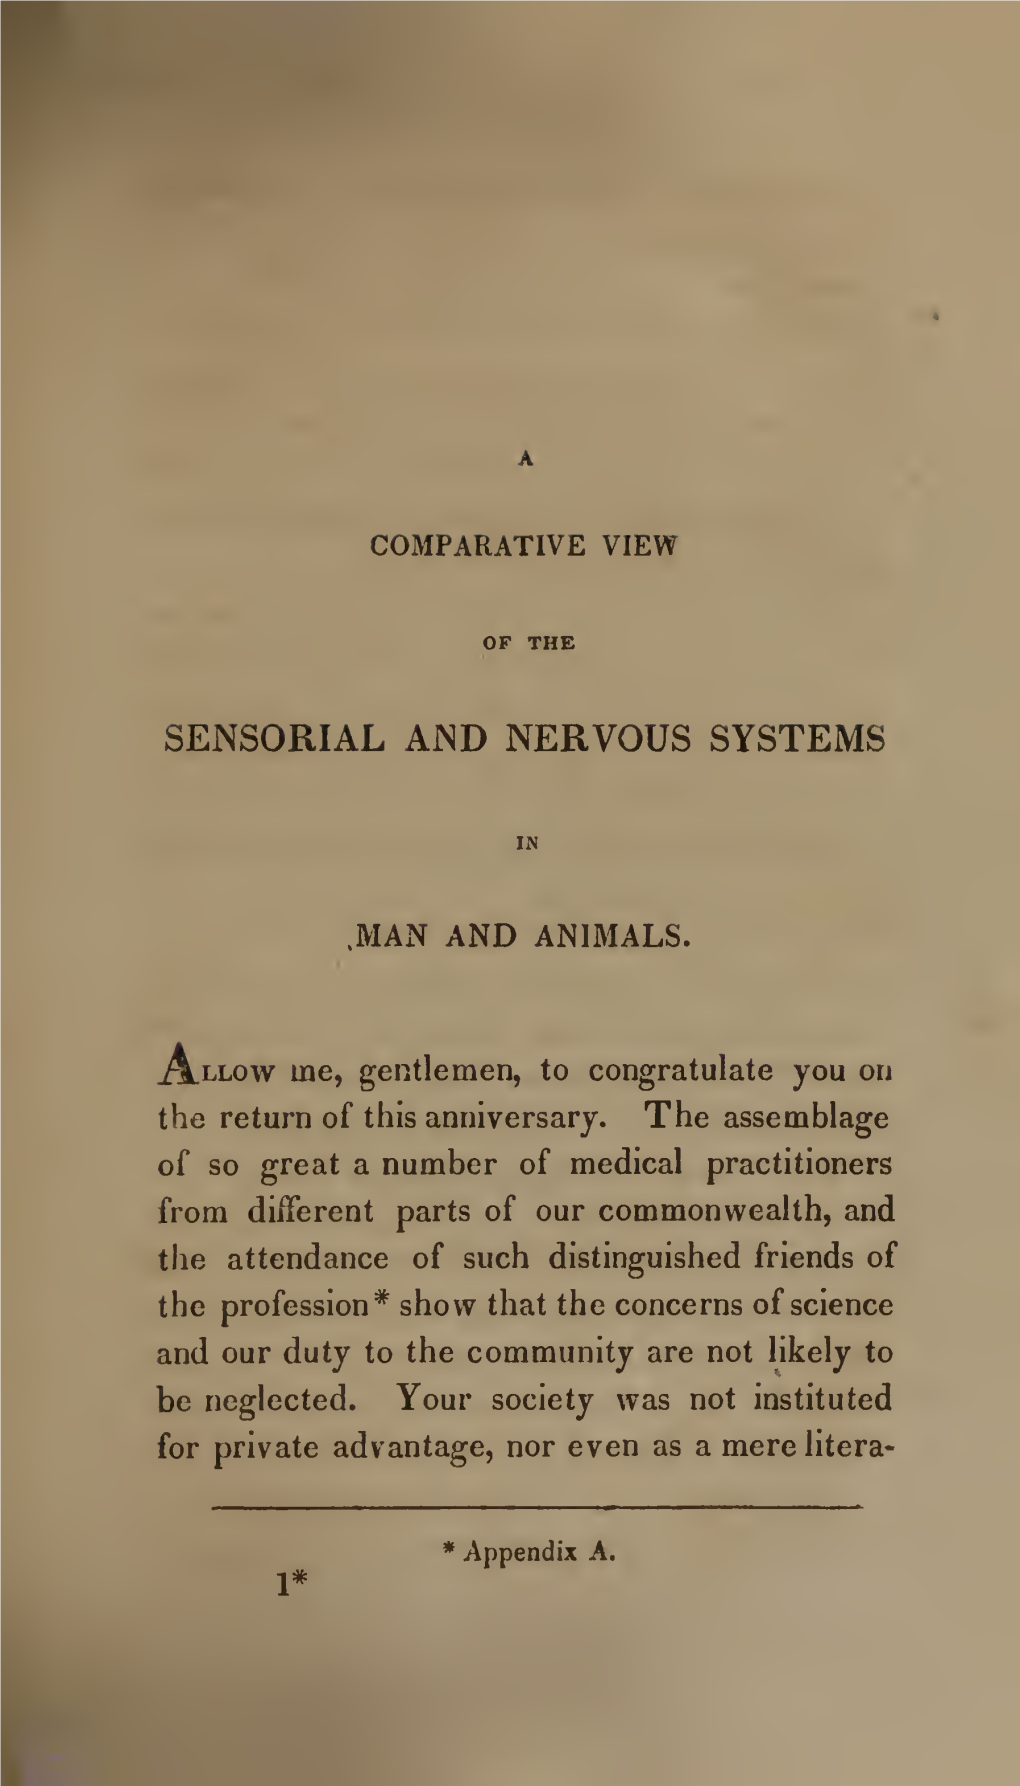 Sensorial Ajnd Nervous Systems